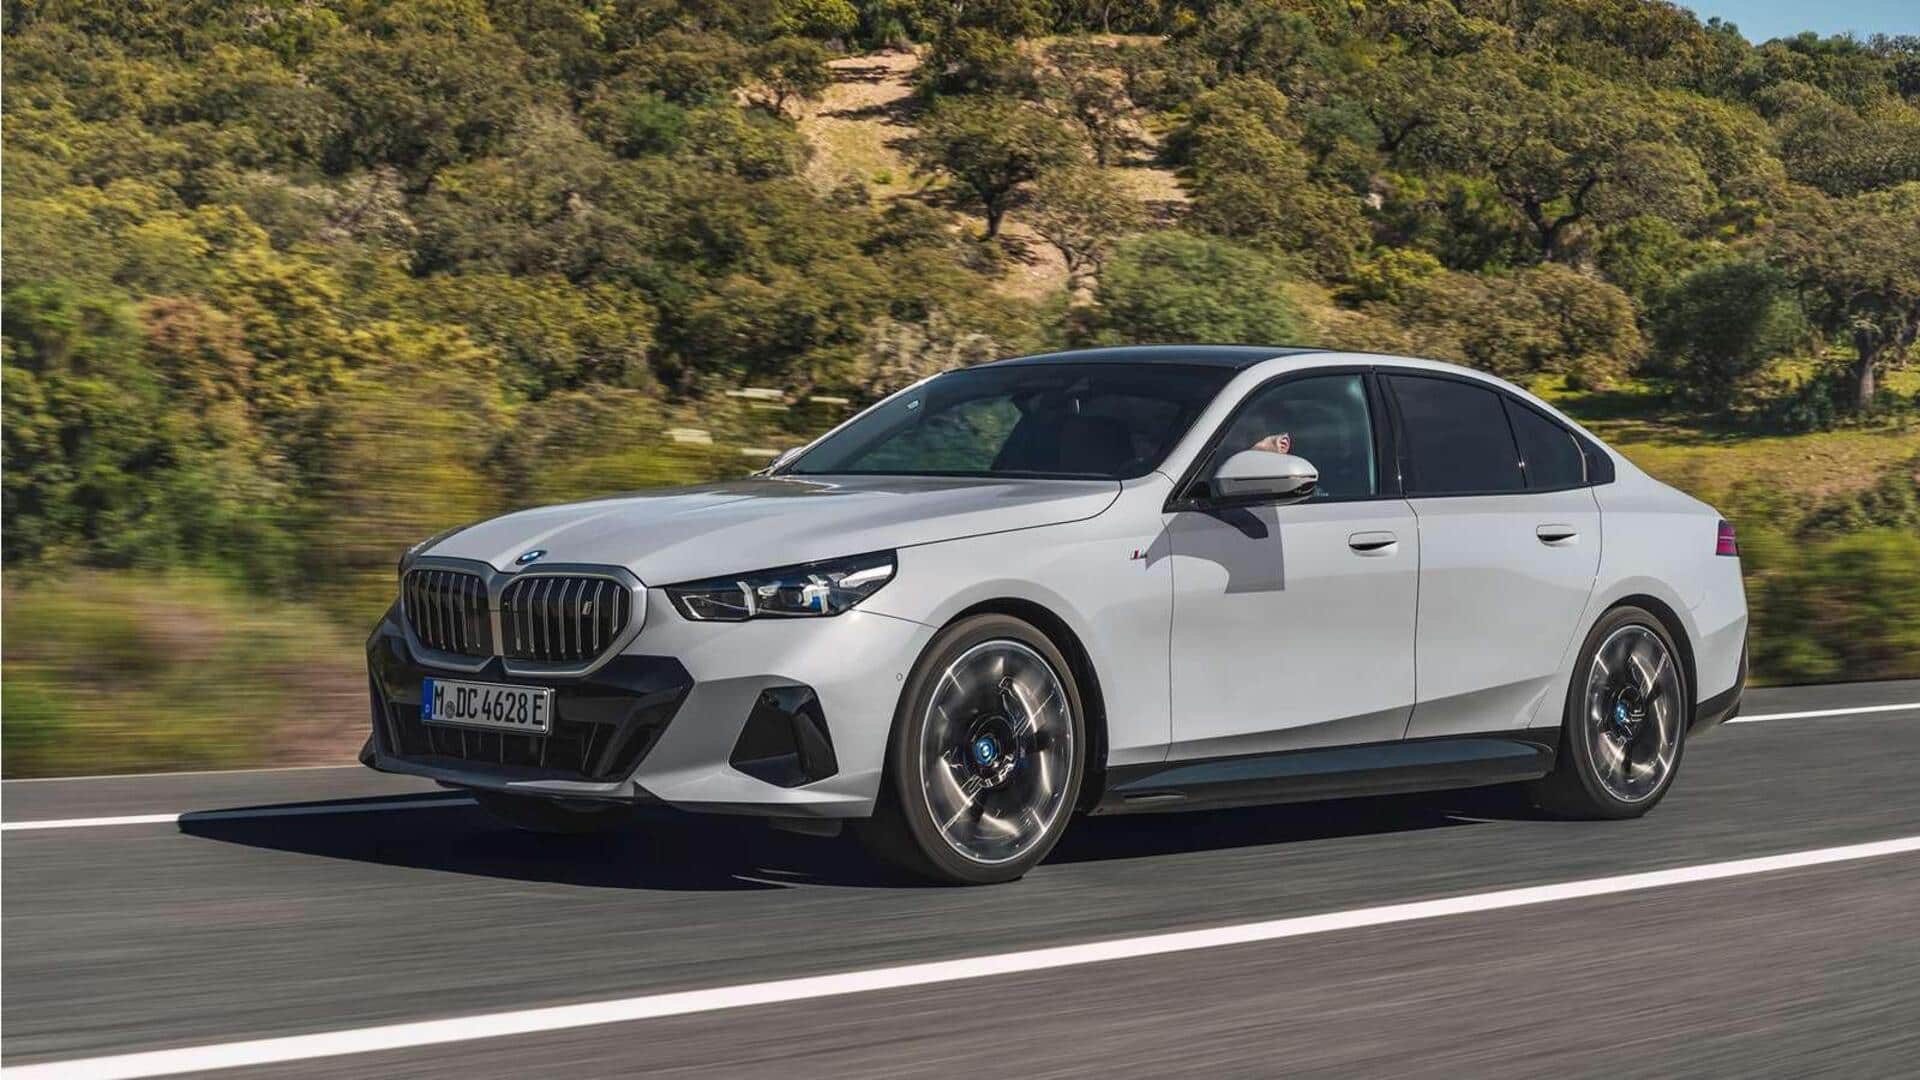 BMW's new plug-in hybrid 5 Series boasts fuel-efficiency of 100km/l